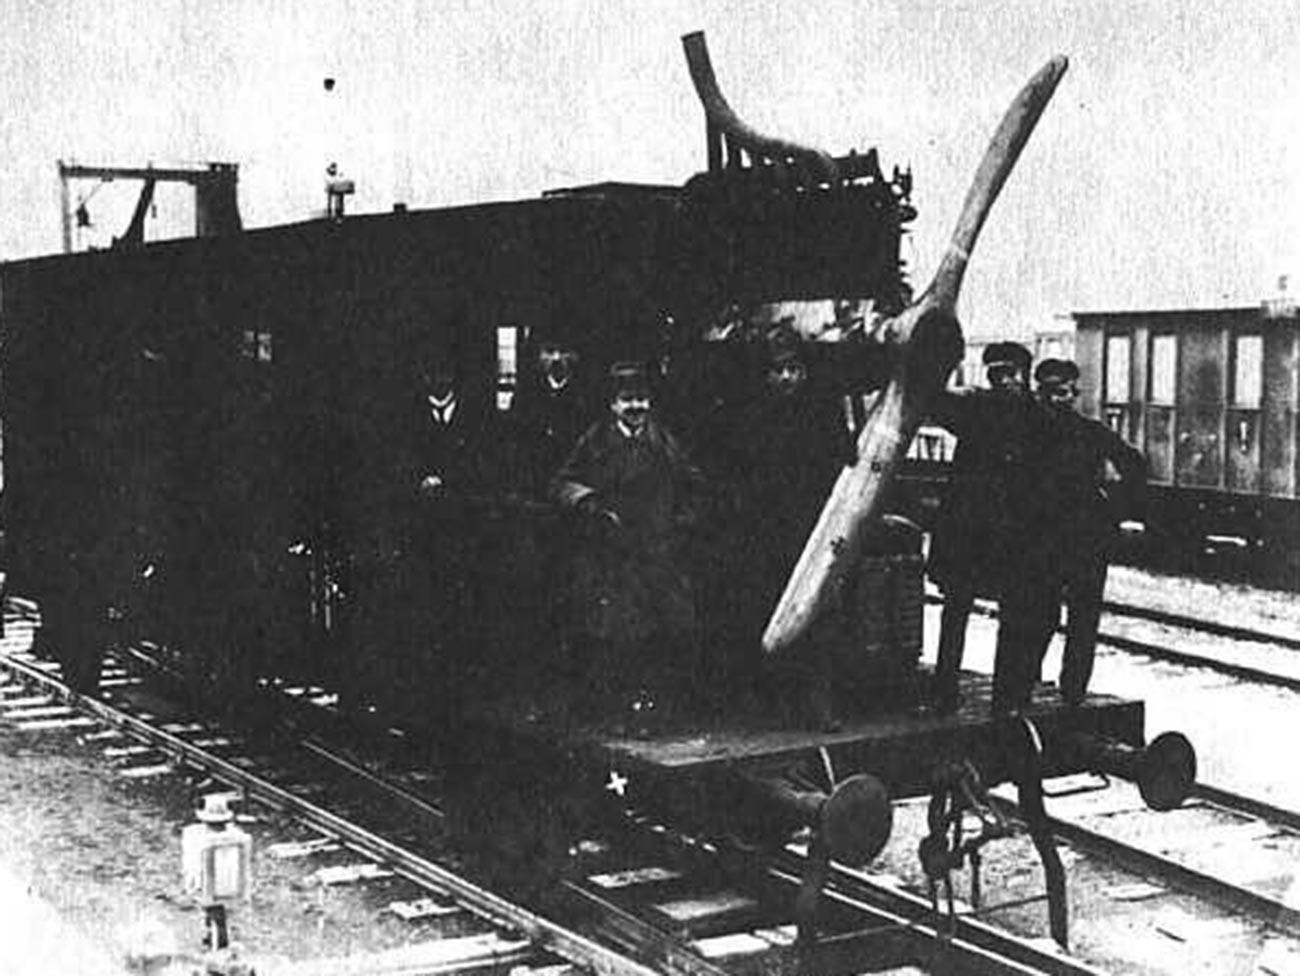 Locomotiva com hélice Dringos